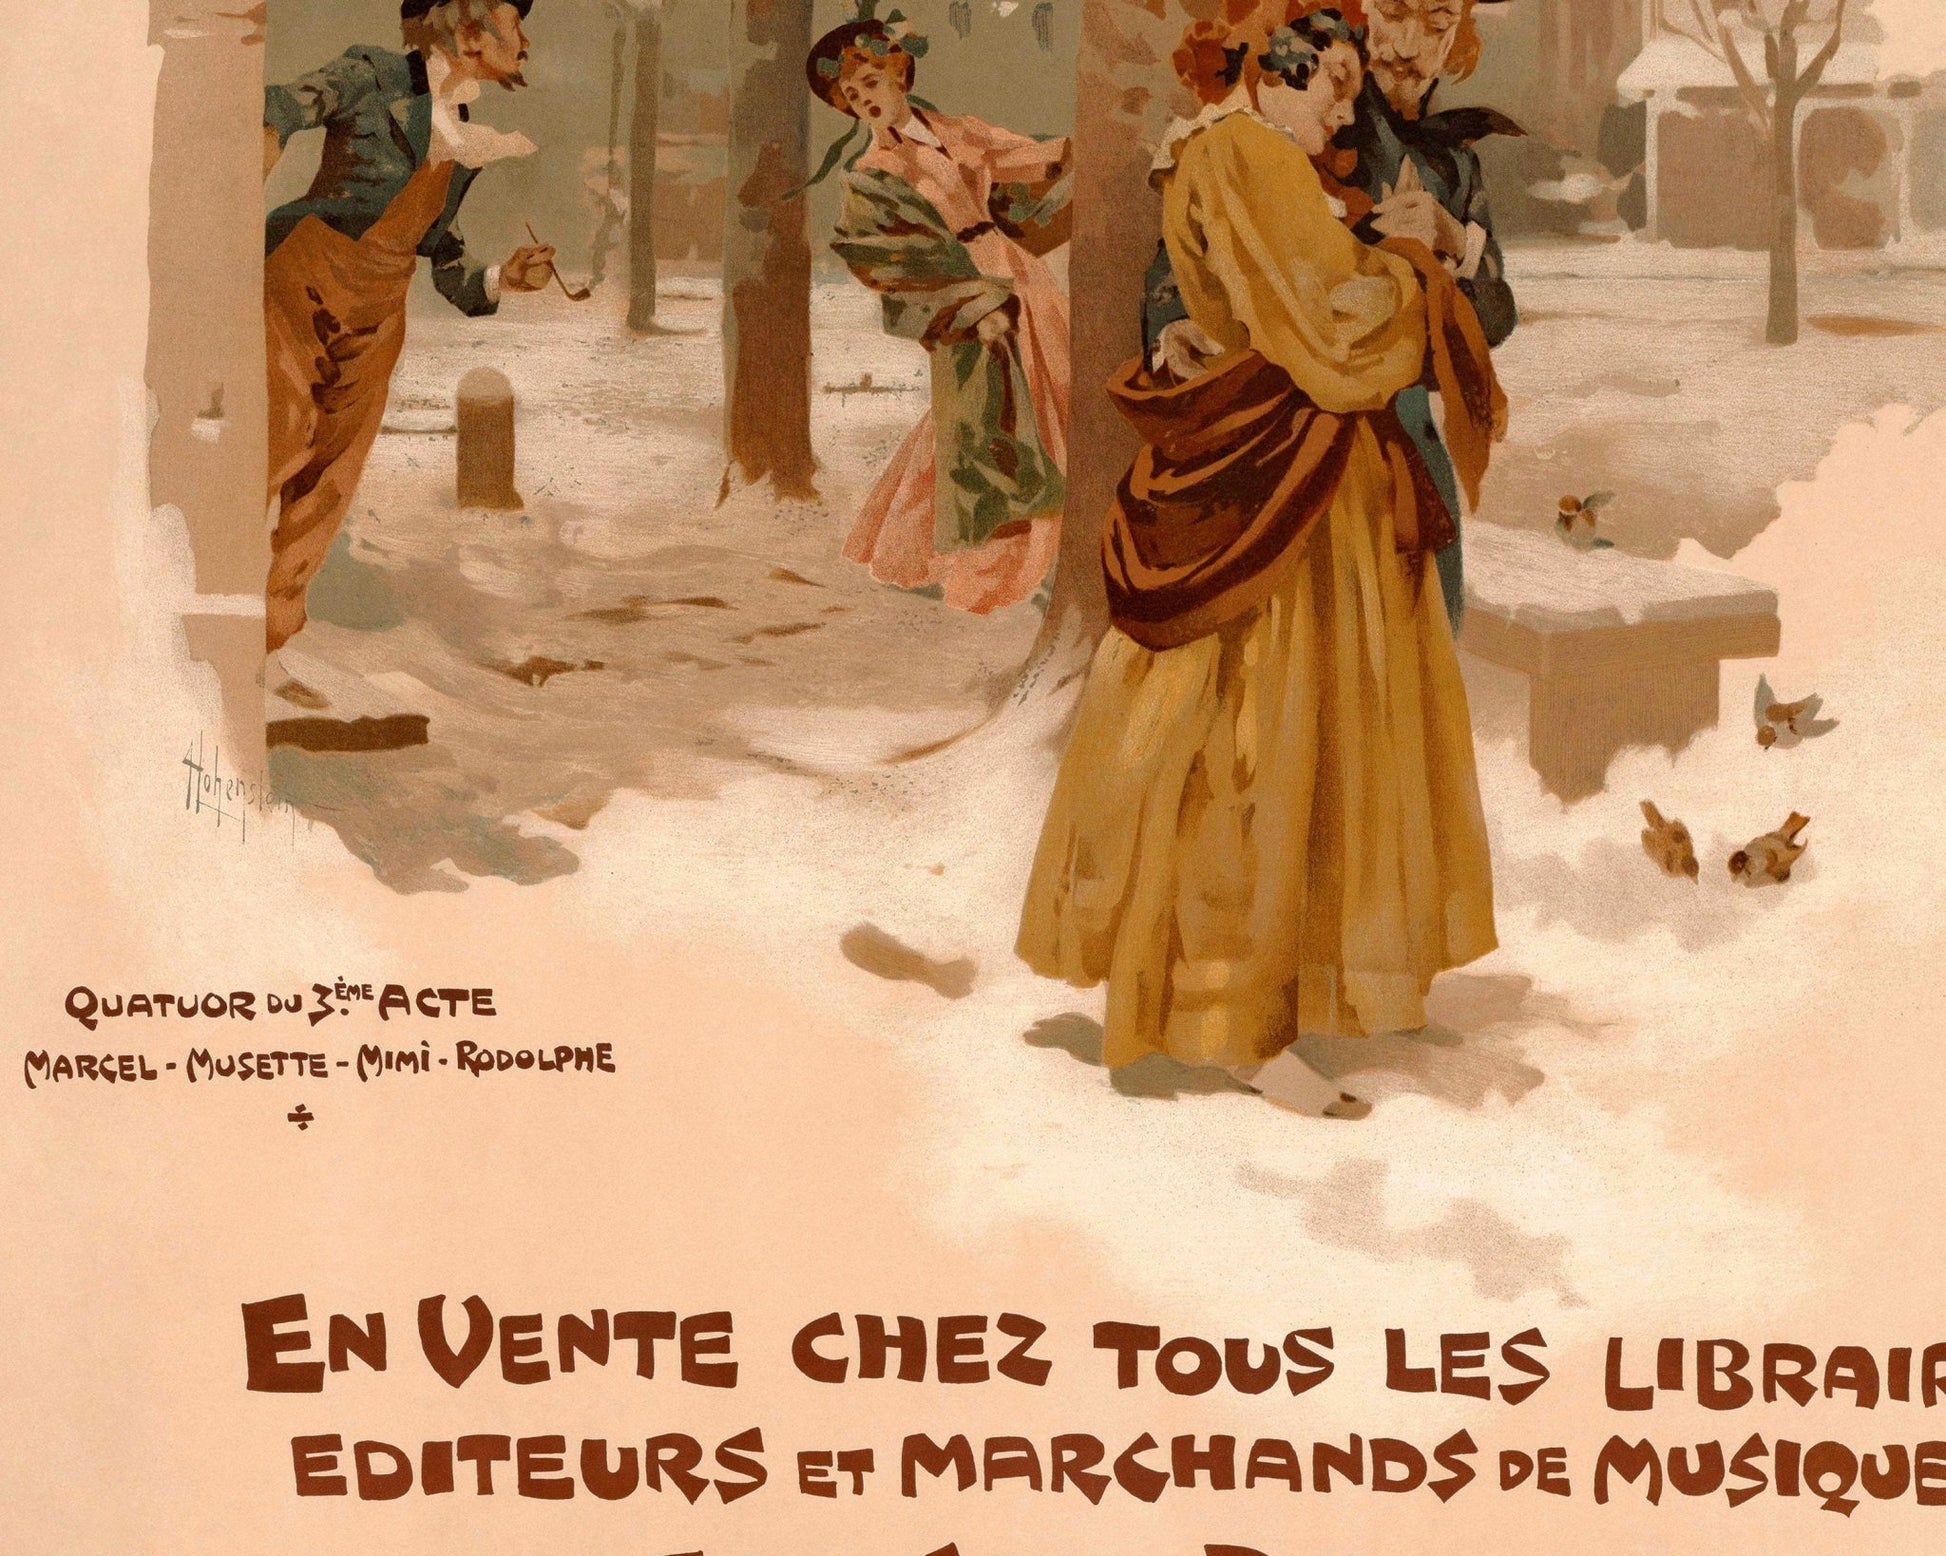 Vintage Opera Poster " La Bohème" (c.1895) Adolfo Hohenstein - Mabon Gallery